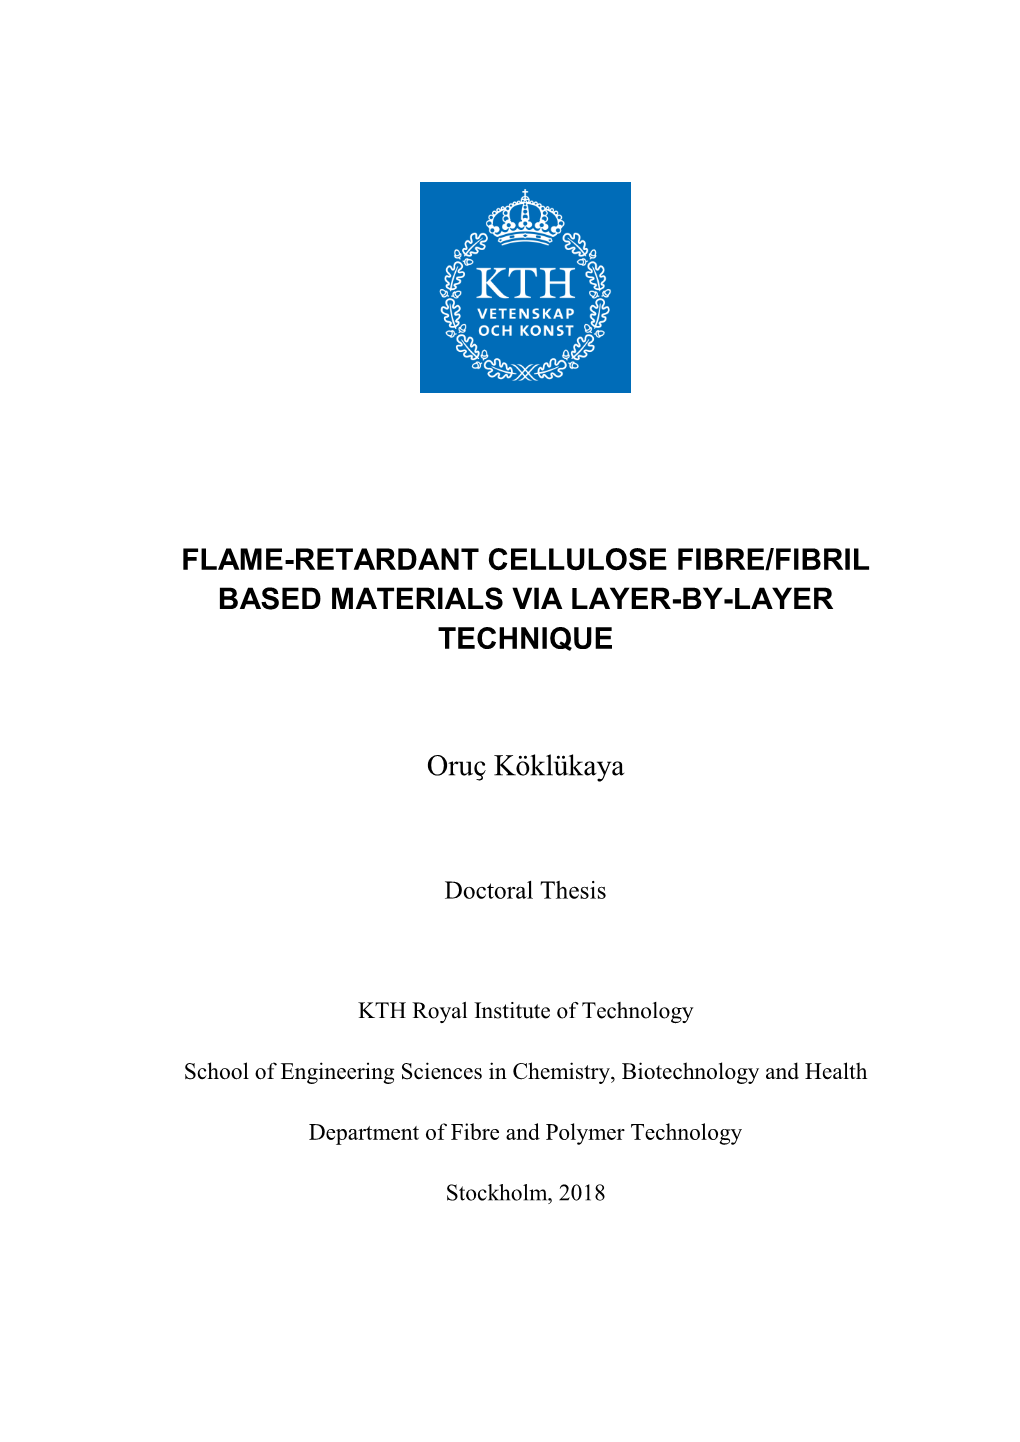 FLAME-RETARDANT CELLULOSE FIBRE/FIBRIL BASED MATERIALS VIA LAYER-BY-LAYER TECHNIQUE Oruҫ Köklükaya